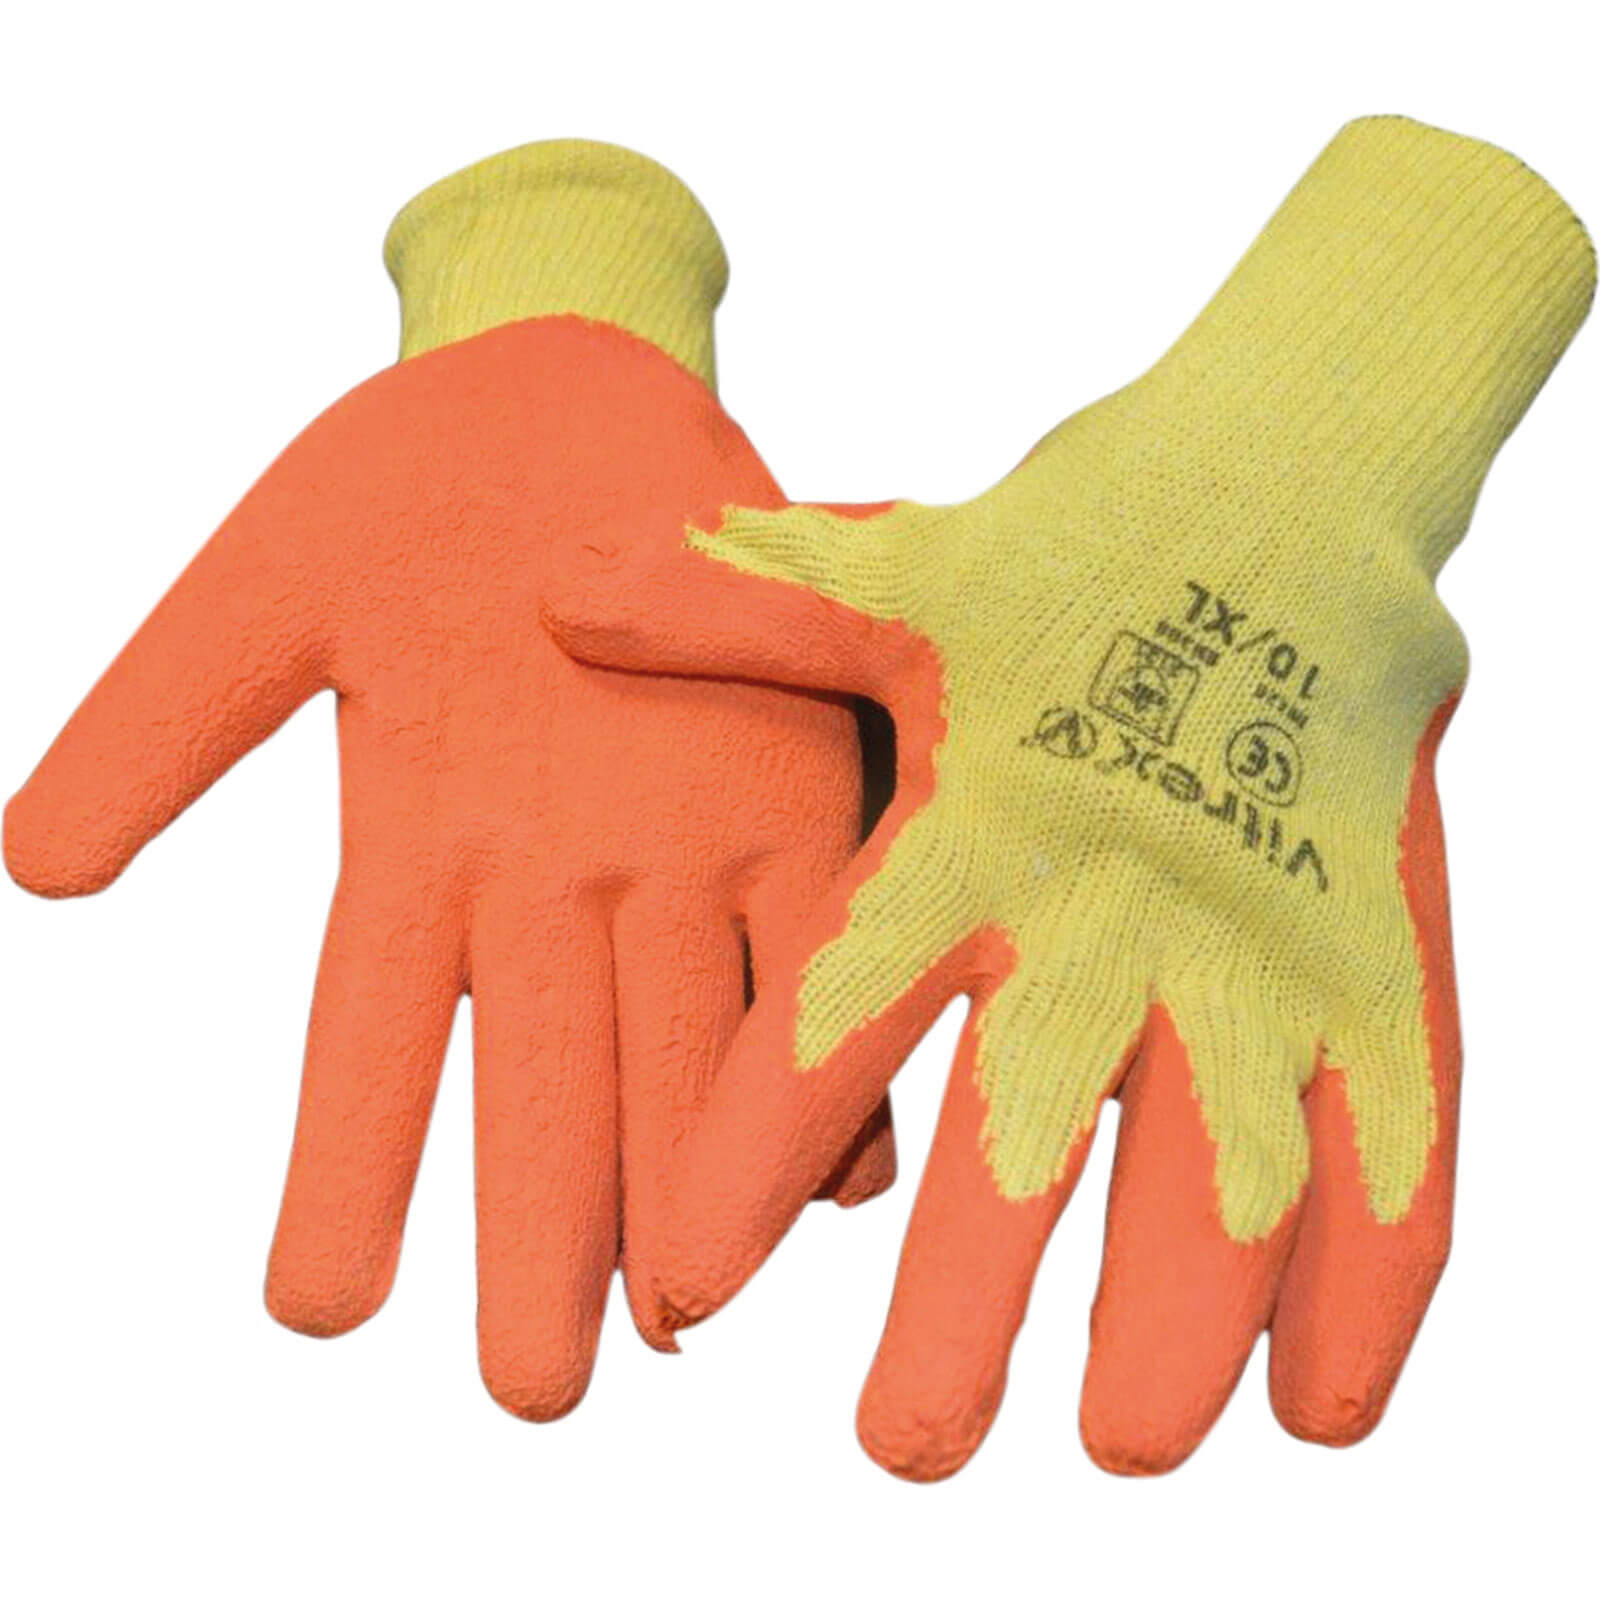 Photos - Safety Equipment Vitrex Builders Grip Glove Yellow / Orange One Size 